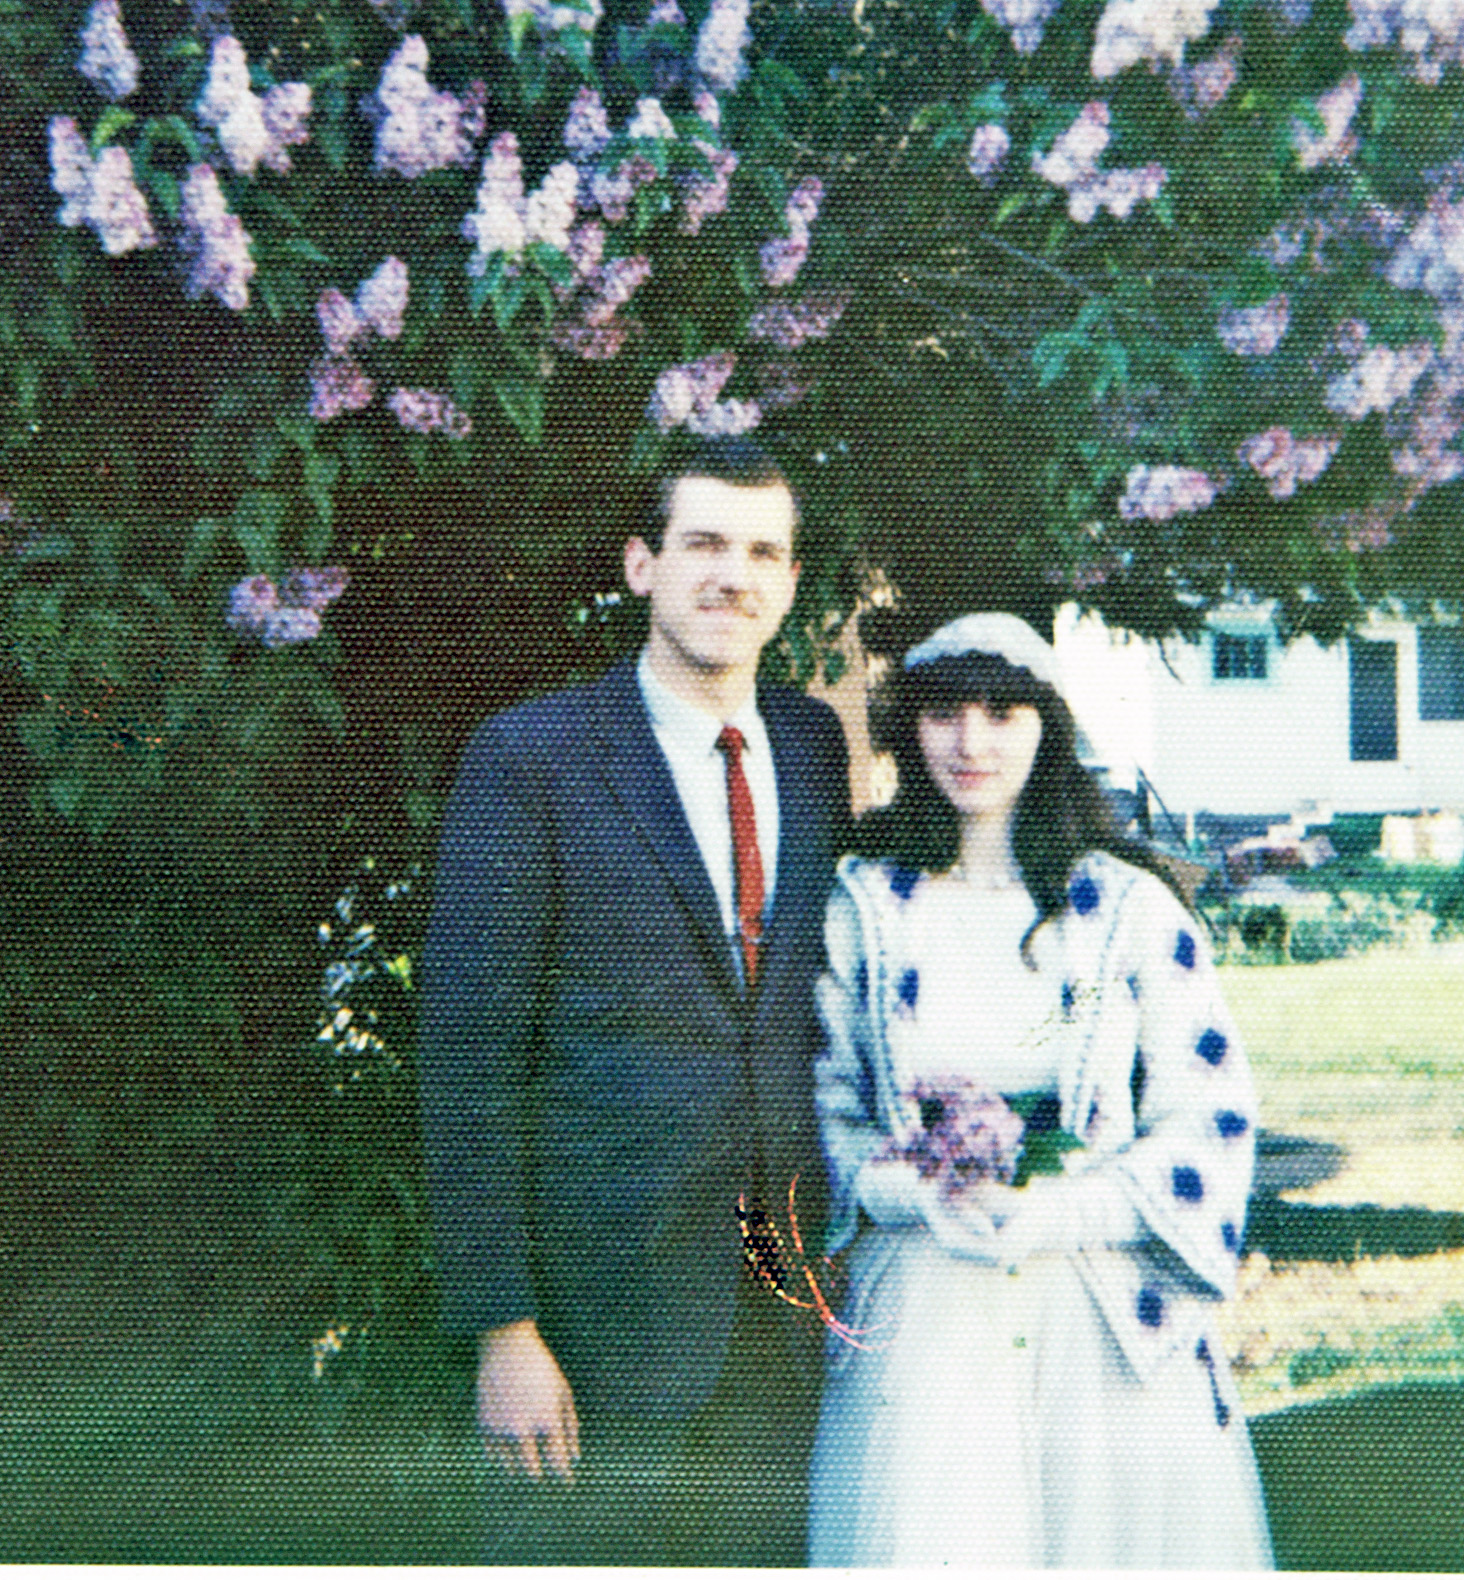 1970 Wedding photo